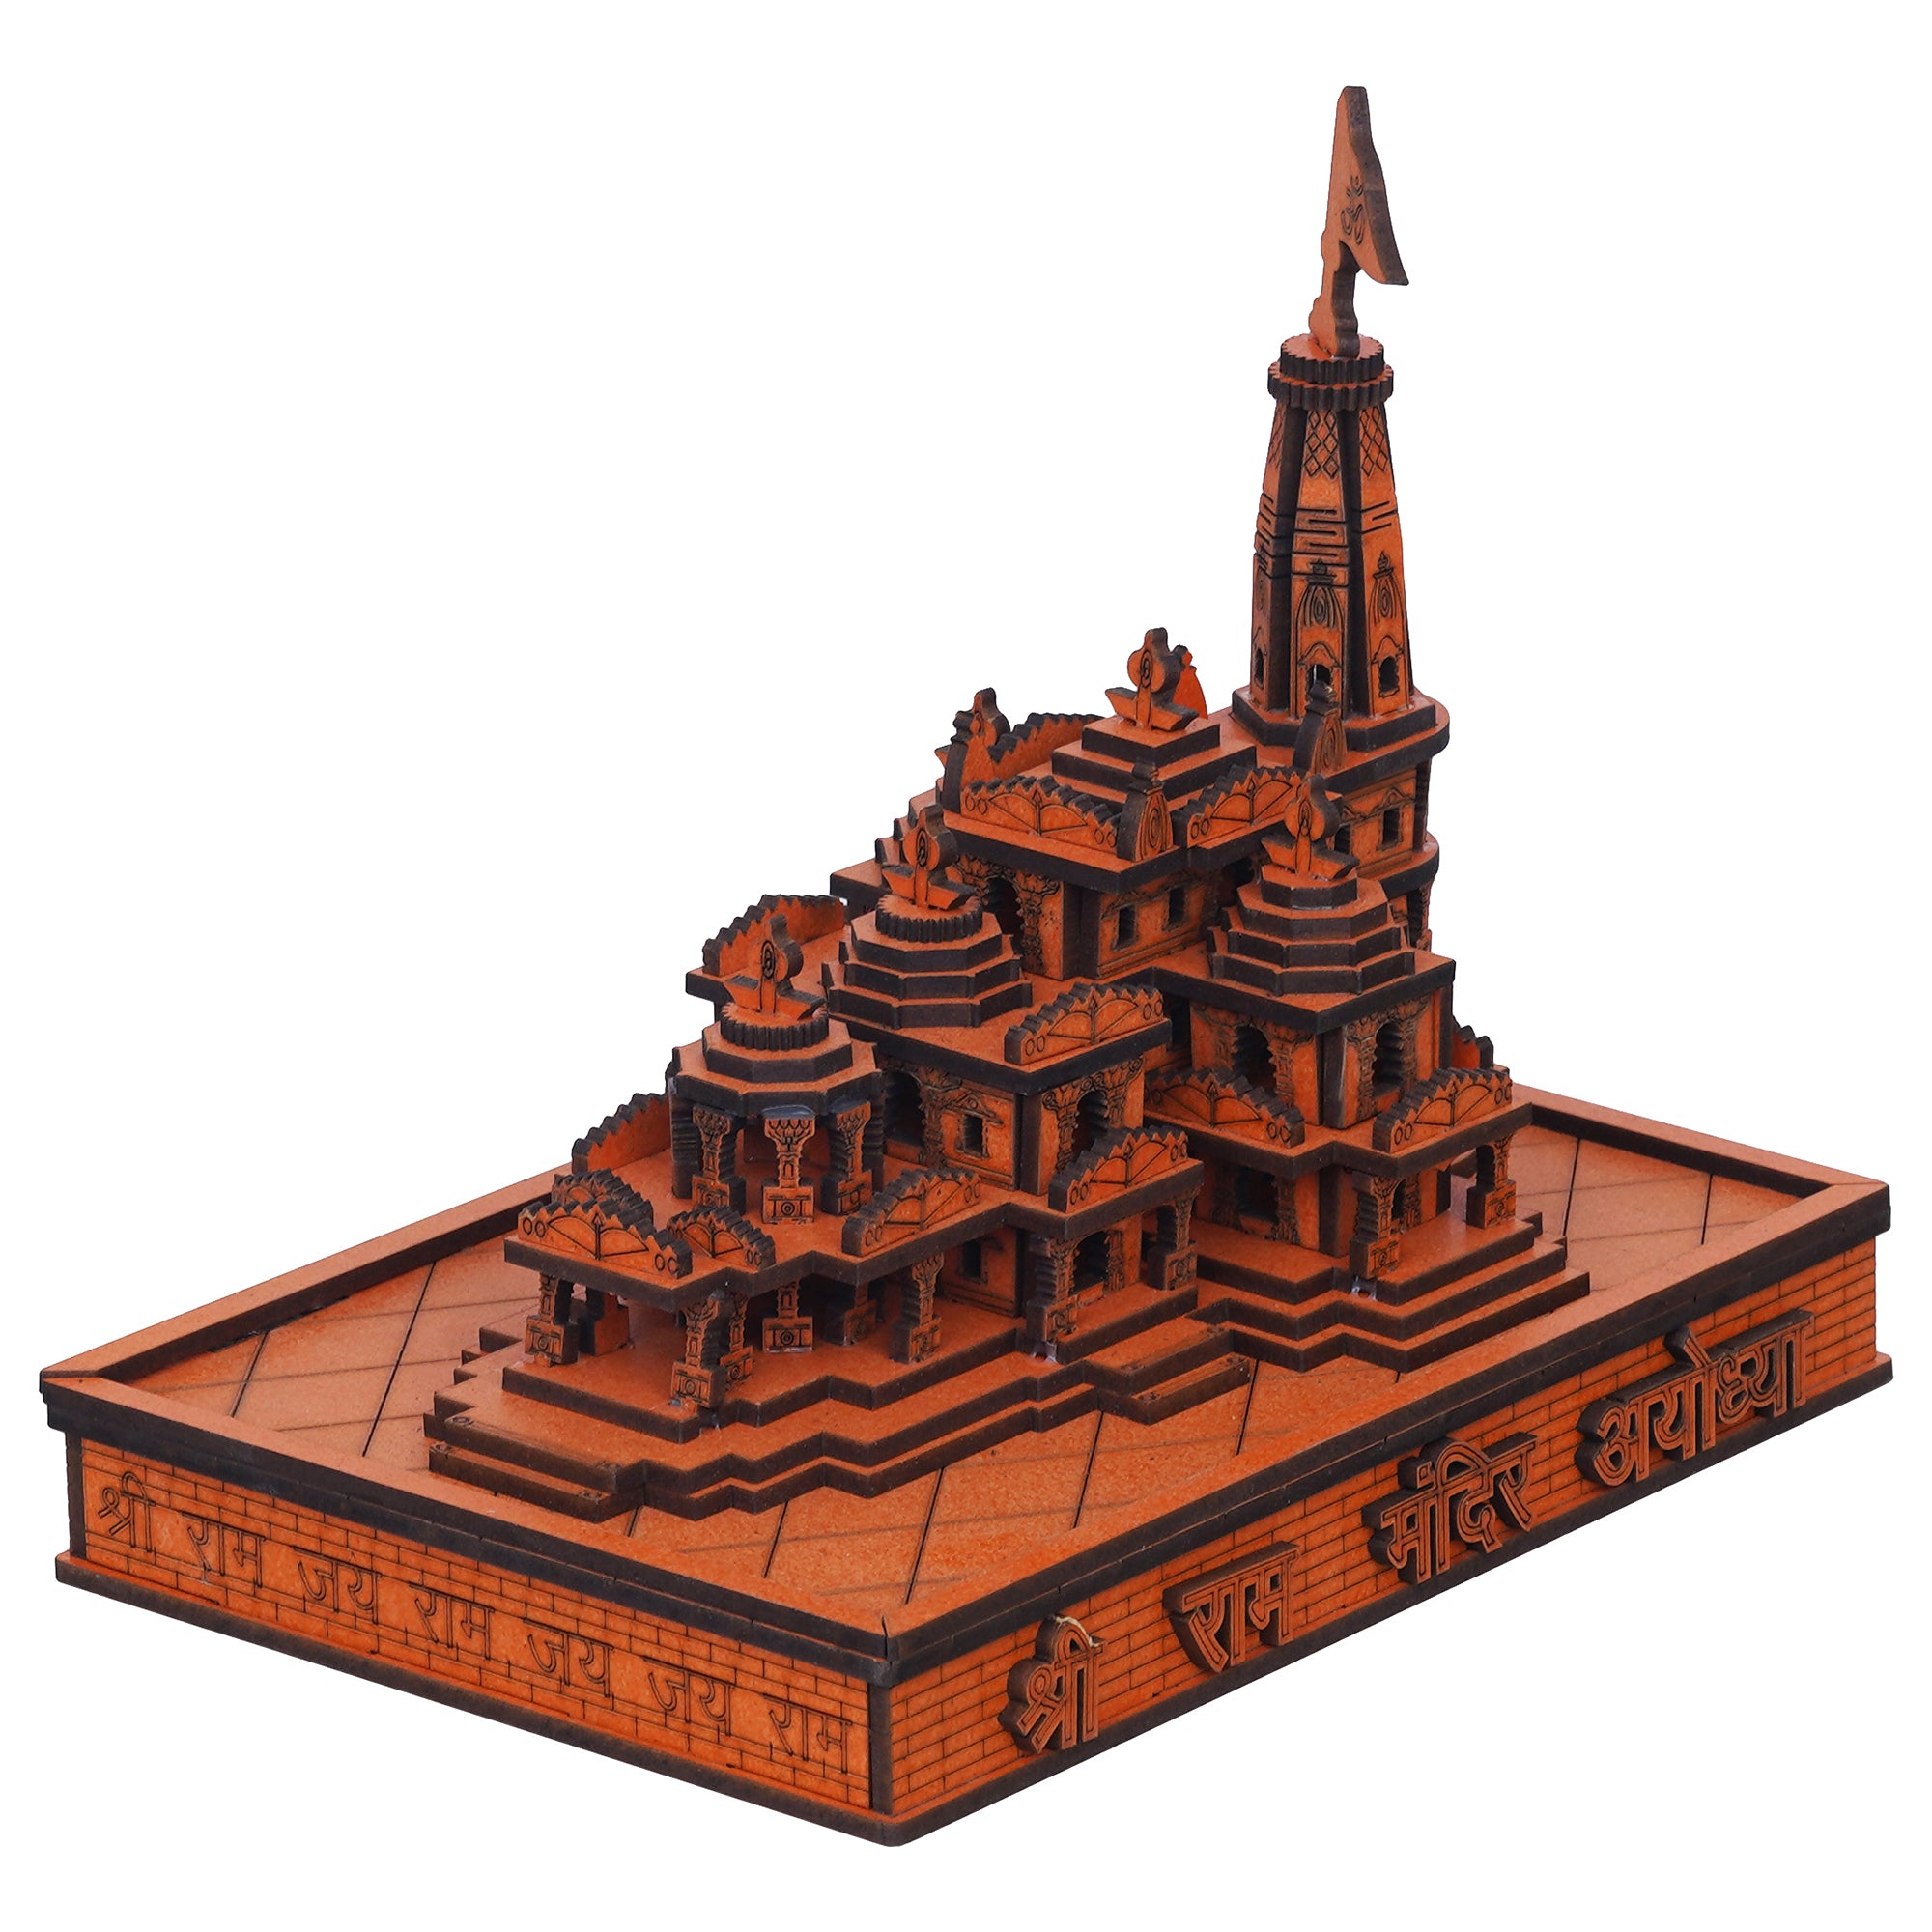 eCraftIndia Shri Ram Mandir Ayodhya Model - Wooden MDF Craftsmanship Authentic Designer Temple - Ideal for Home Temple, Decor, and Spiritual Gifting (Orange) 6